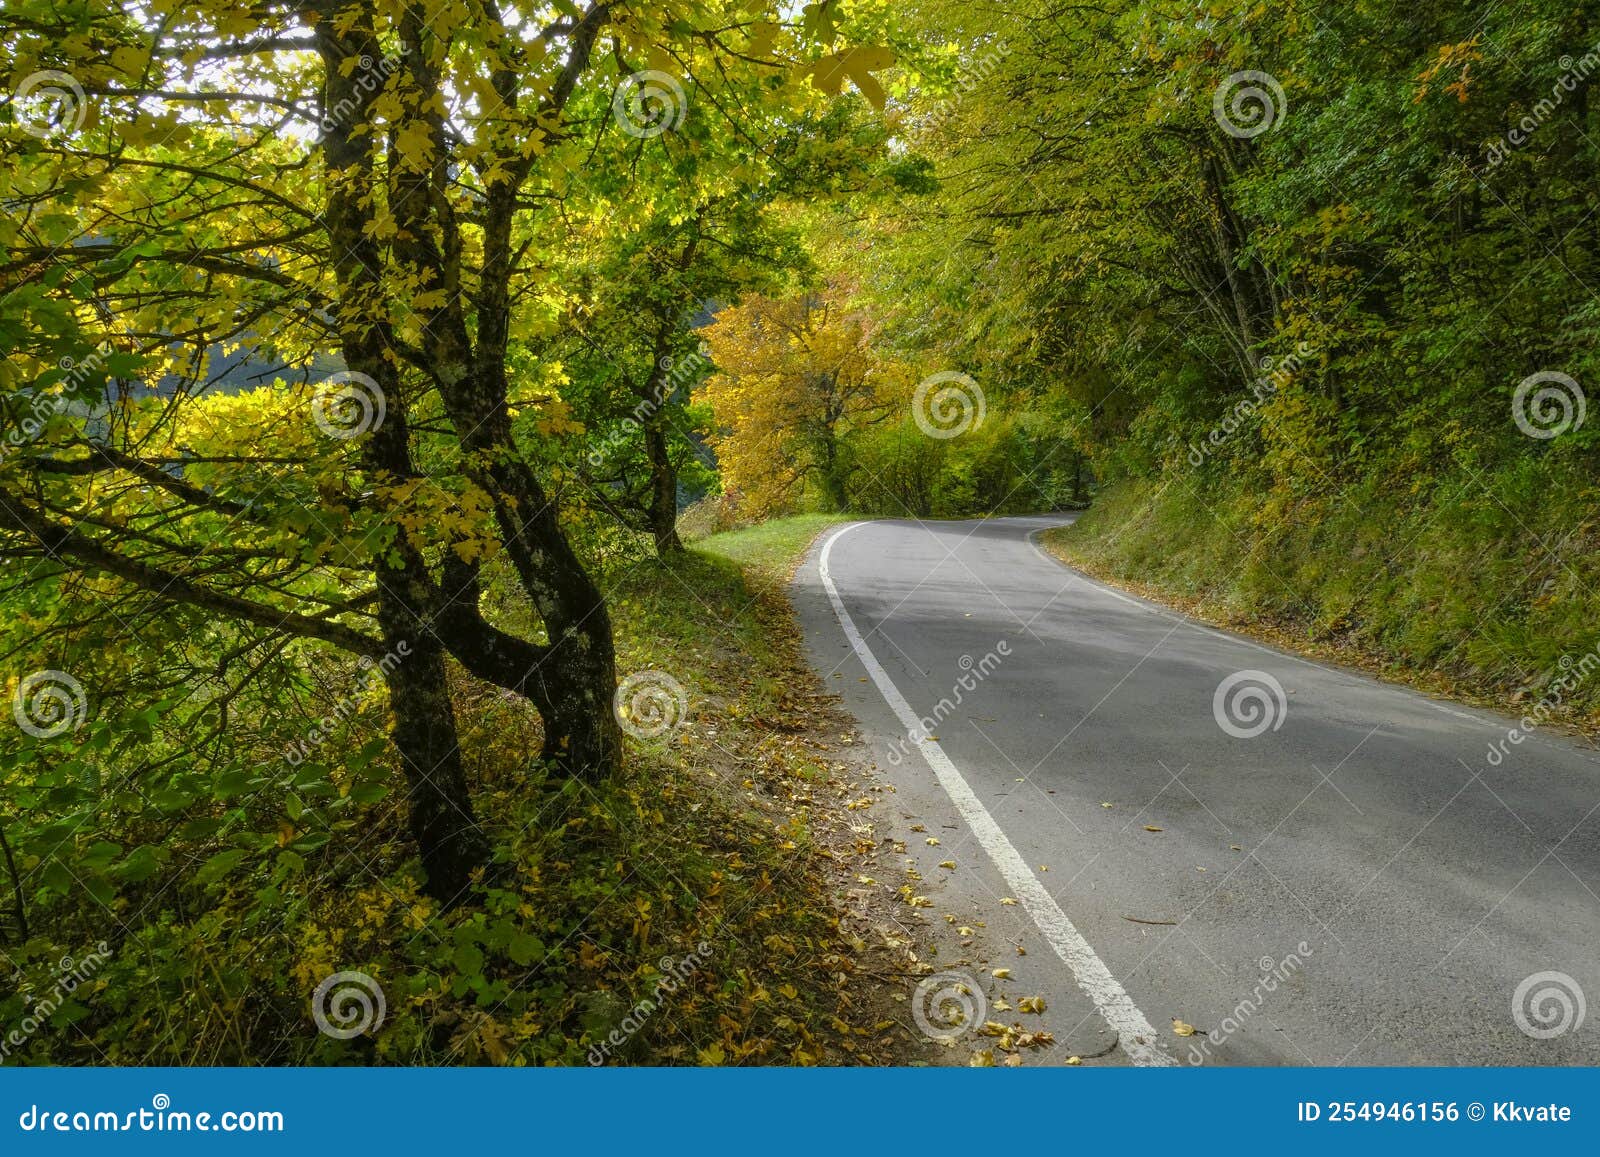 road in autumn forest. autumn nature. parco natural regionale dei boschi di carrega, emilia-romagna, italy